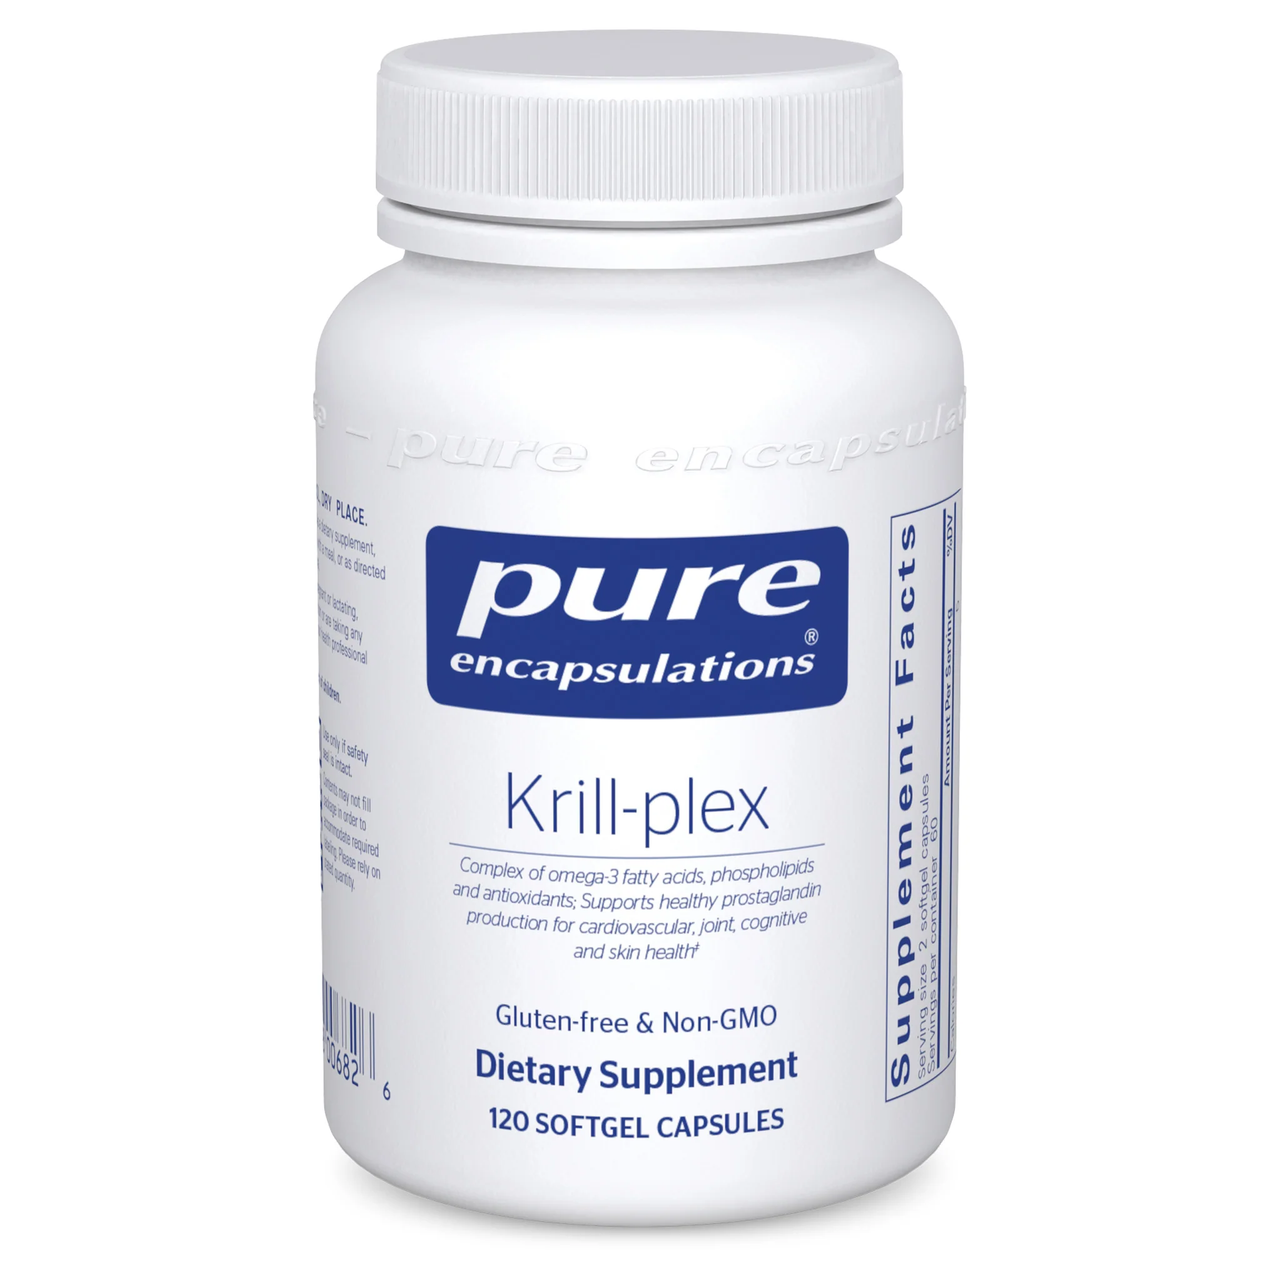 Krill-Plex - Pure Encapsulations